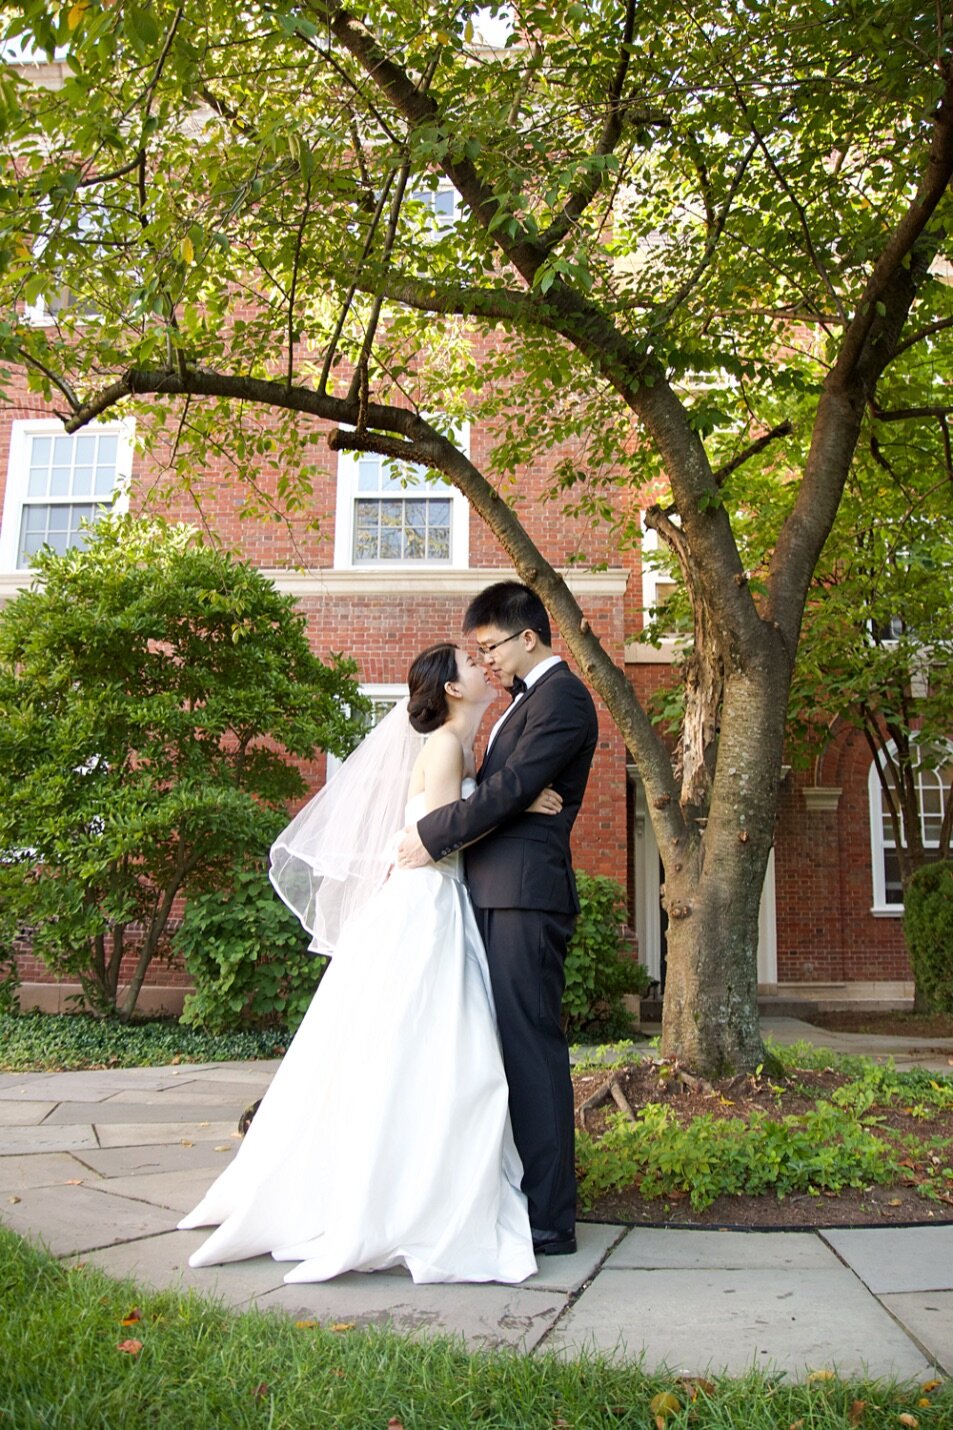  Yale University Bride and Groom Wedding portrait photographer 